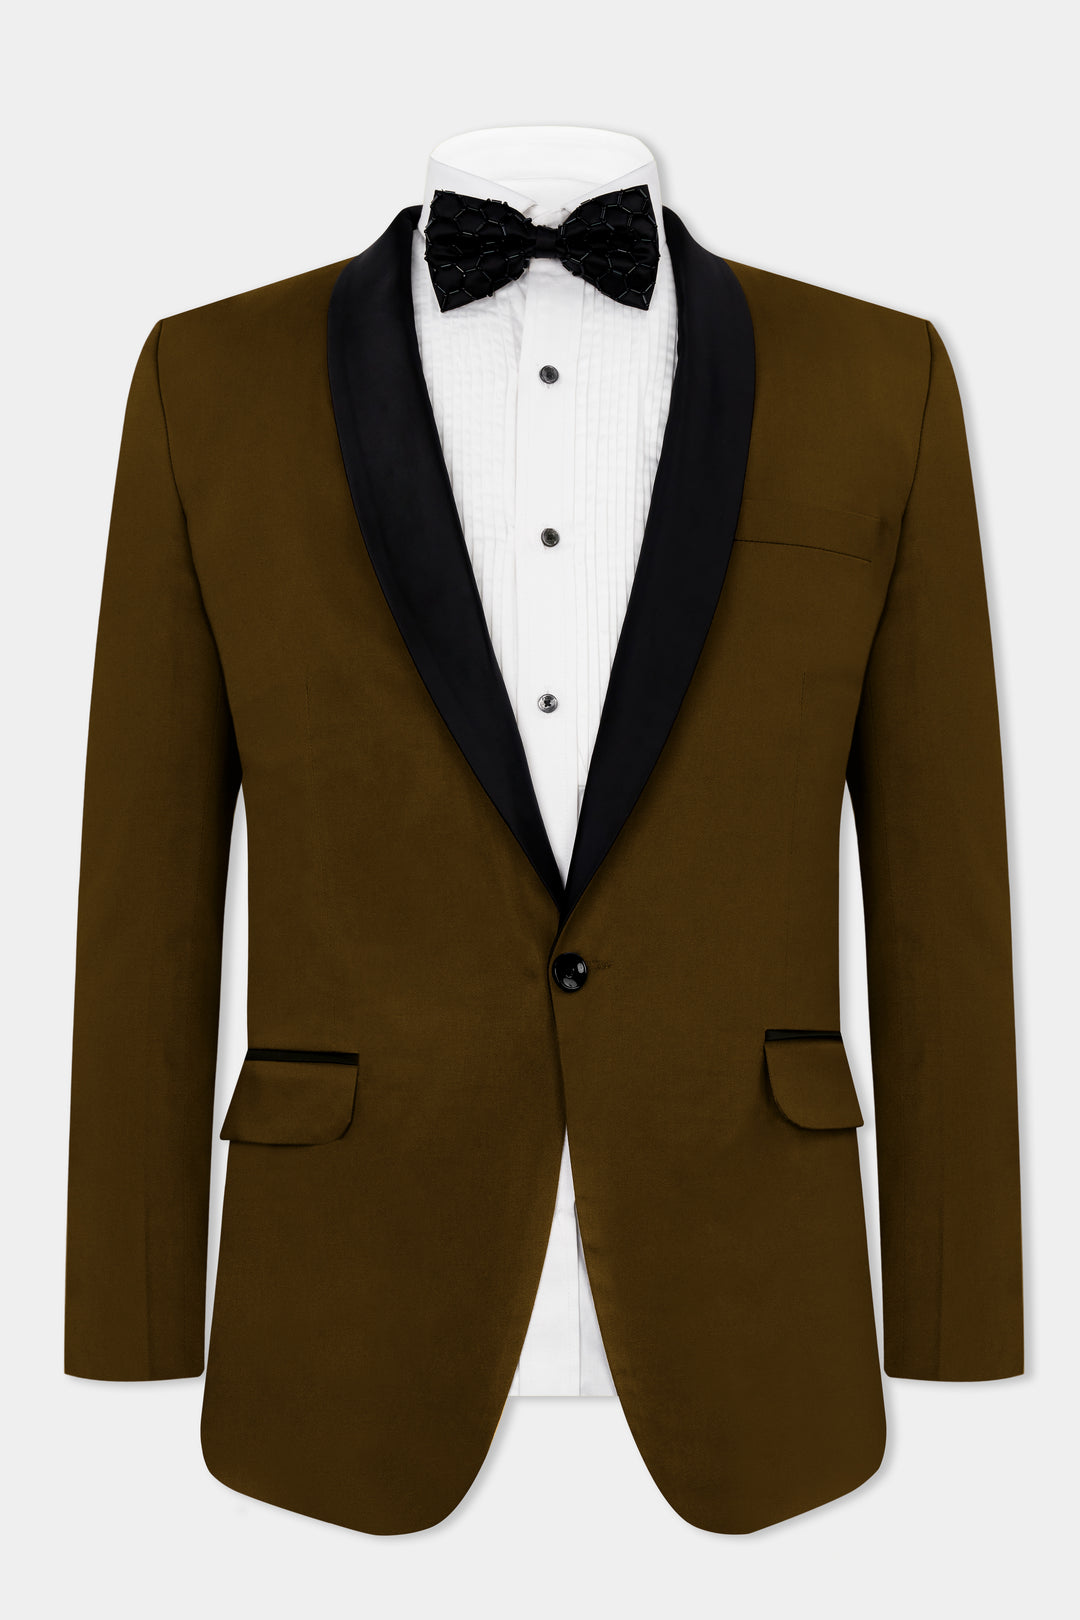 Brown Blazer Combination || Brown Blazer Matching Shirt and Pants - YouTube